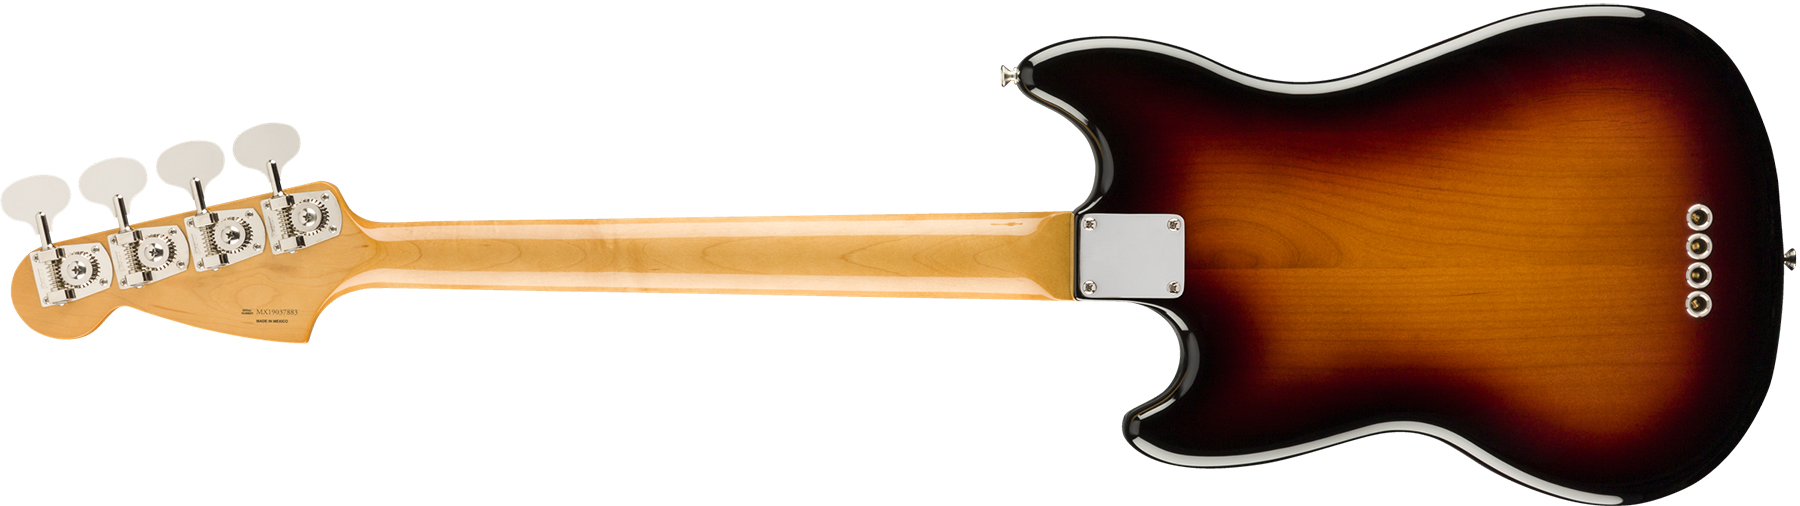 Fender Mustang Bass 60s Vintera Vintage Mex Pf - 3-color Sunburst - Electric bass for kids - Variation 1